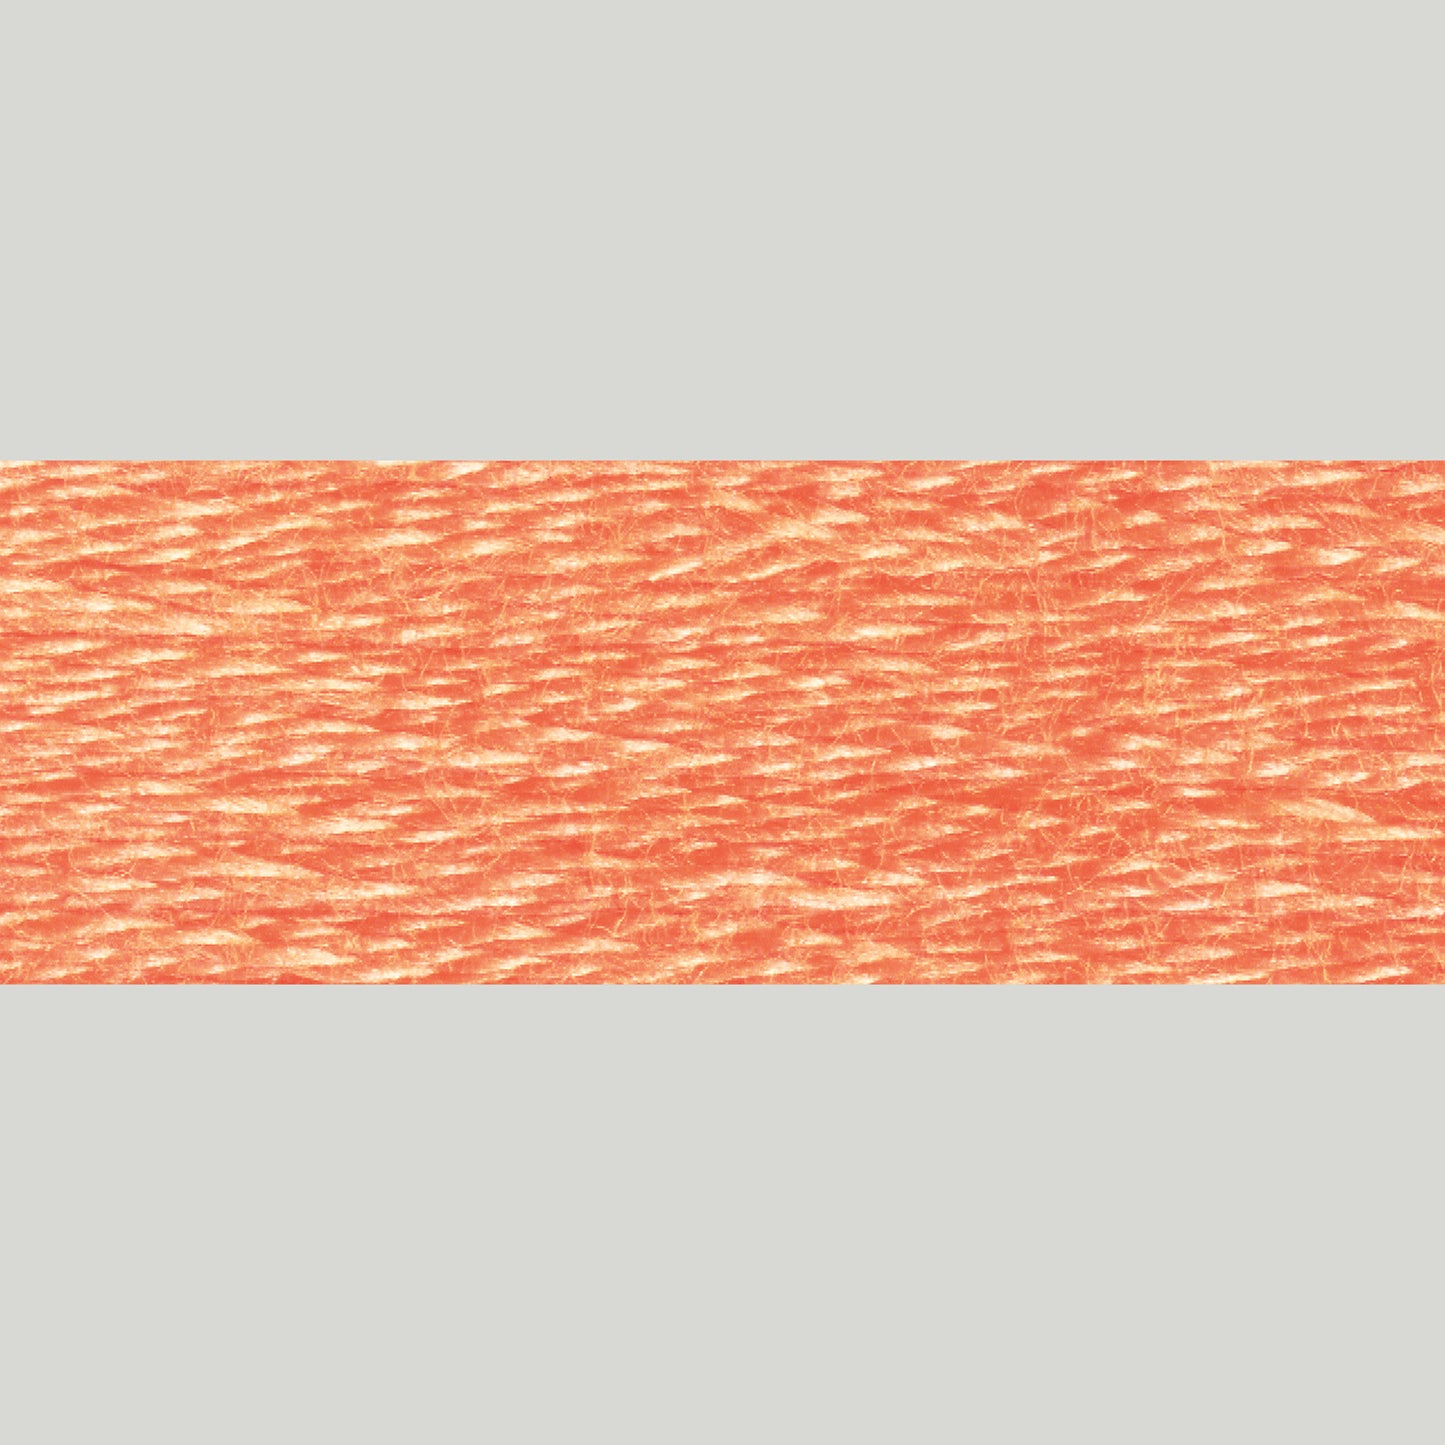 DMC Embroidery Floss - 3341 Apricot Alternative View #1